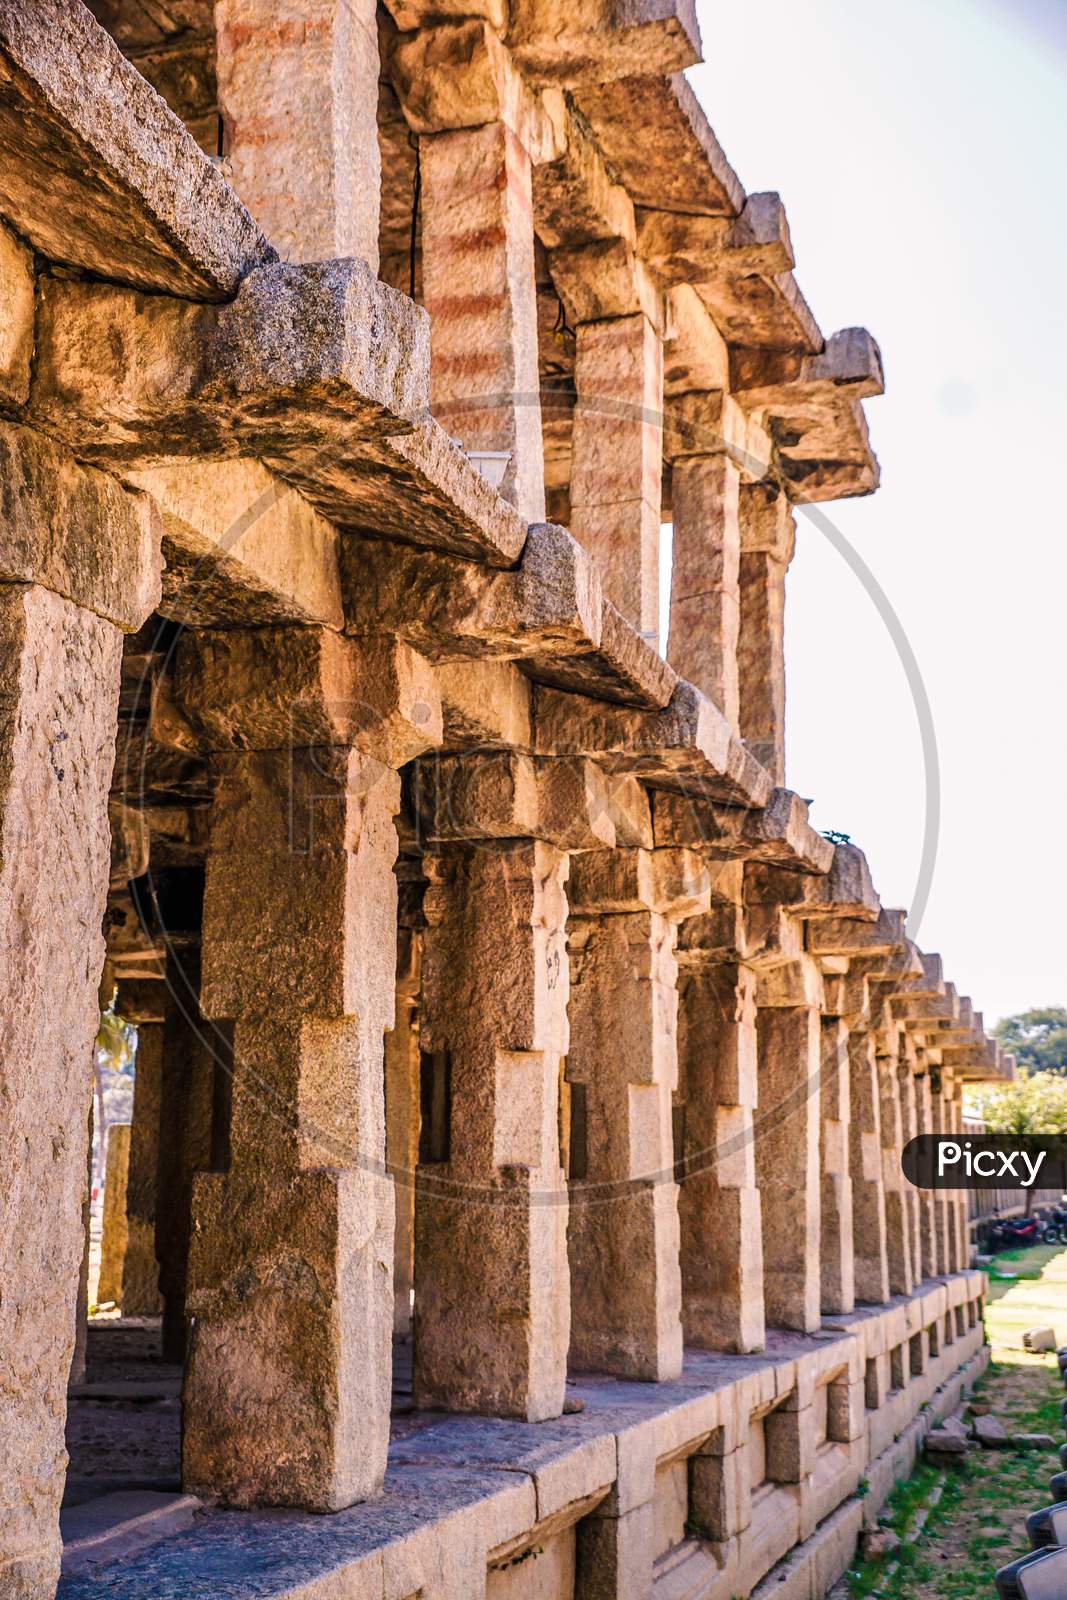 Stone pillars of a Indian Hindu temple